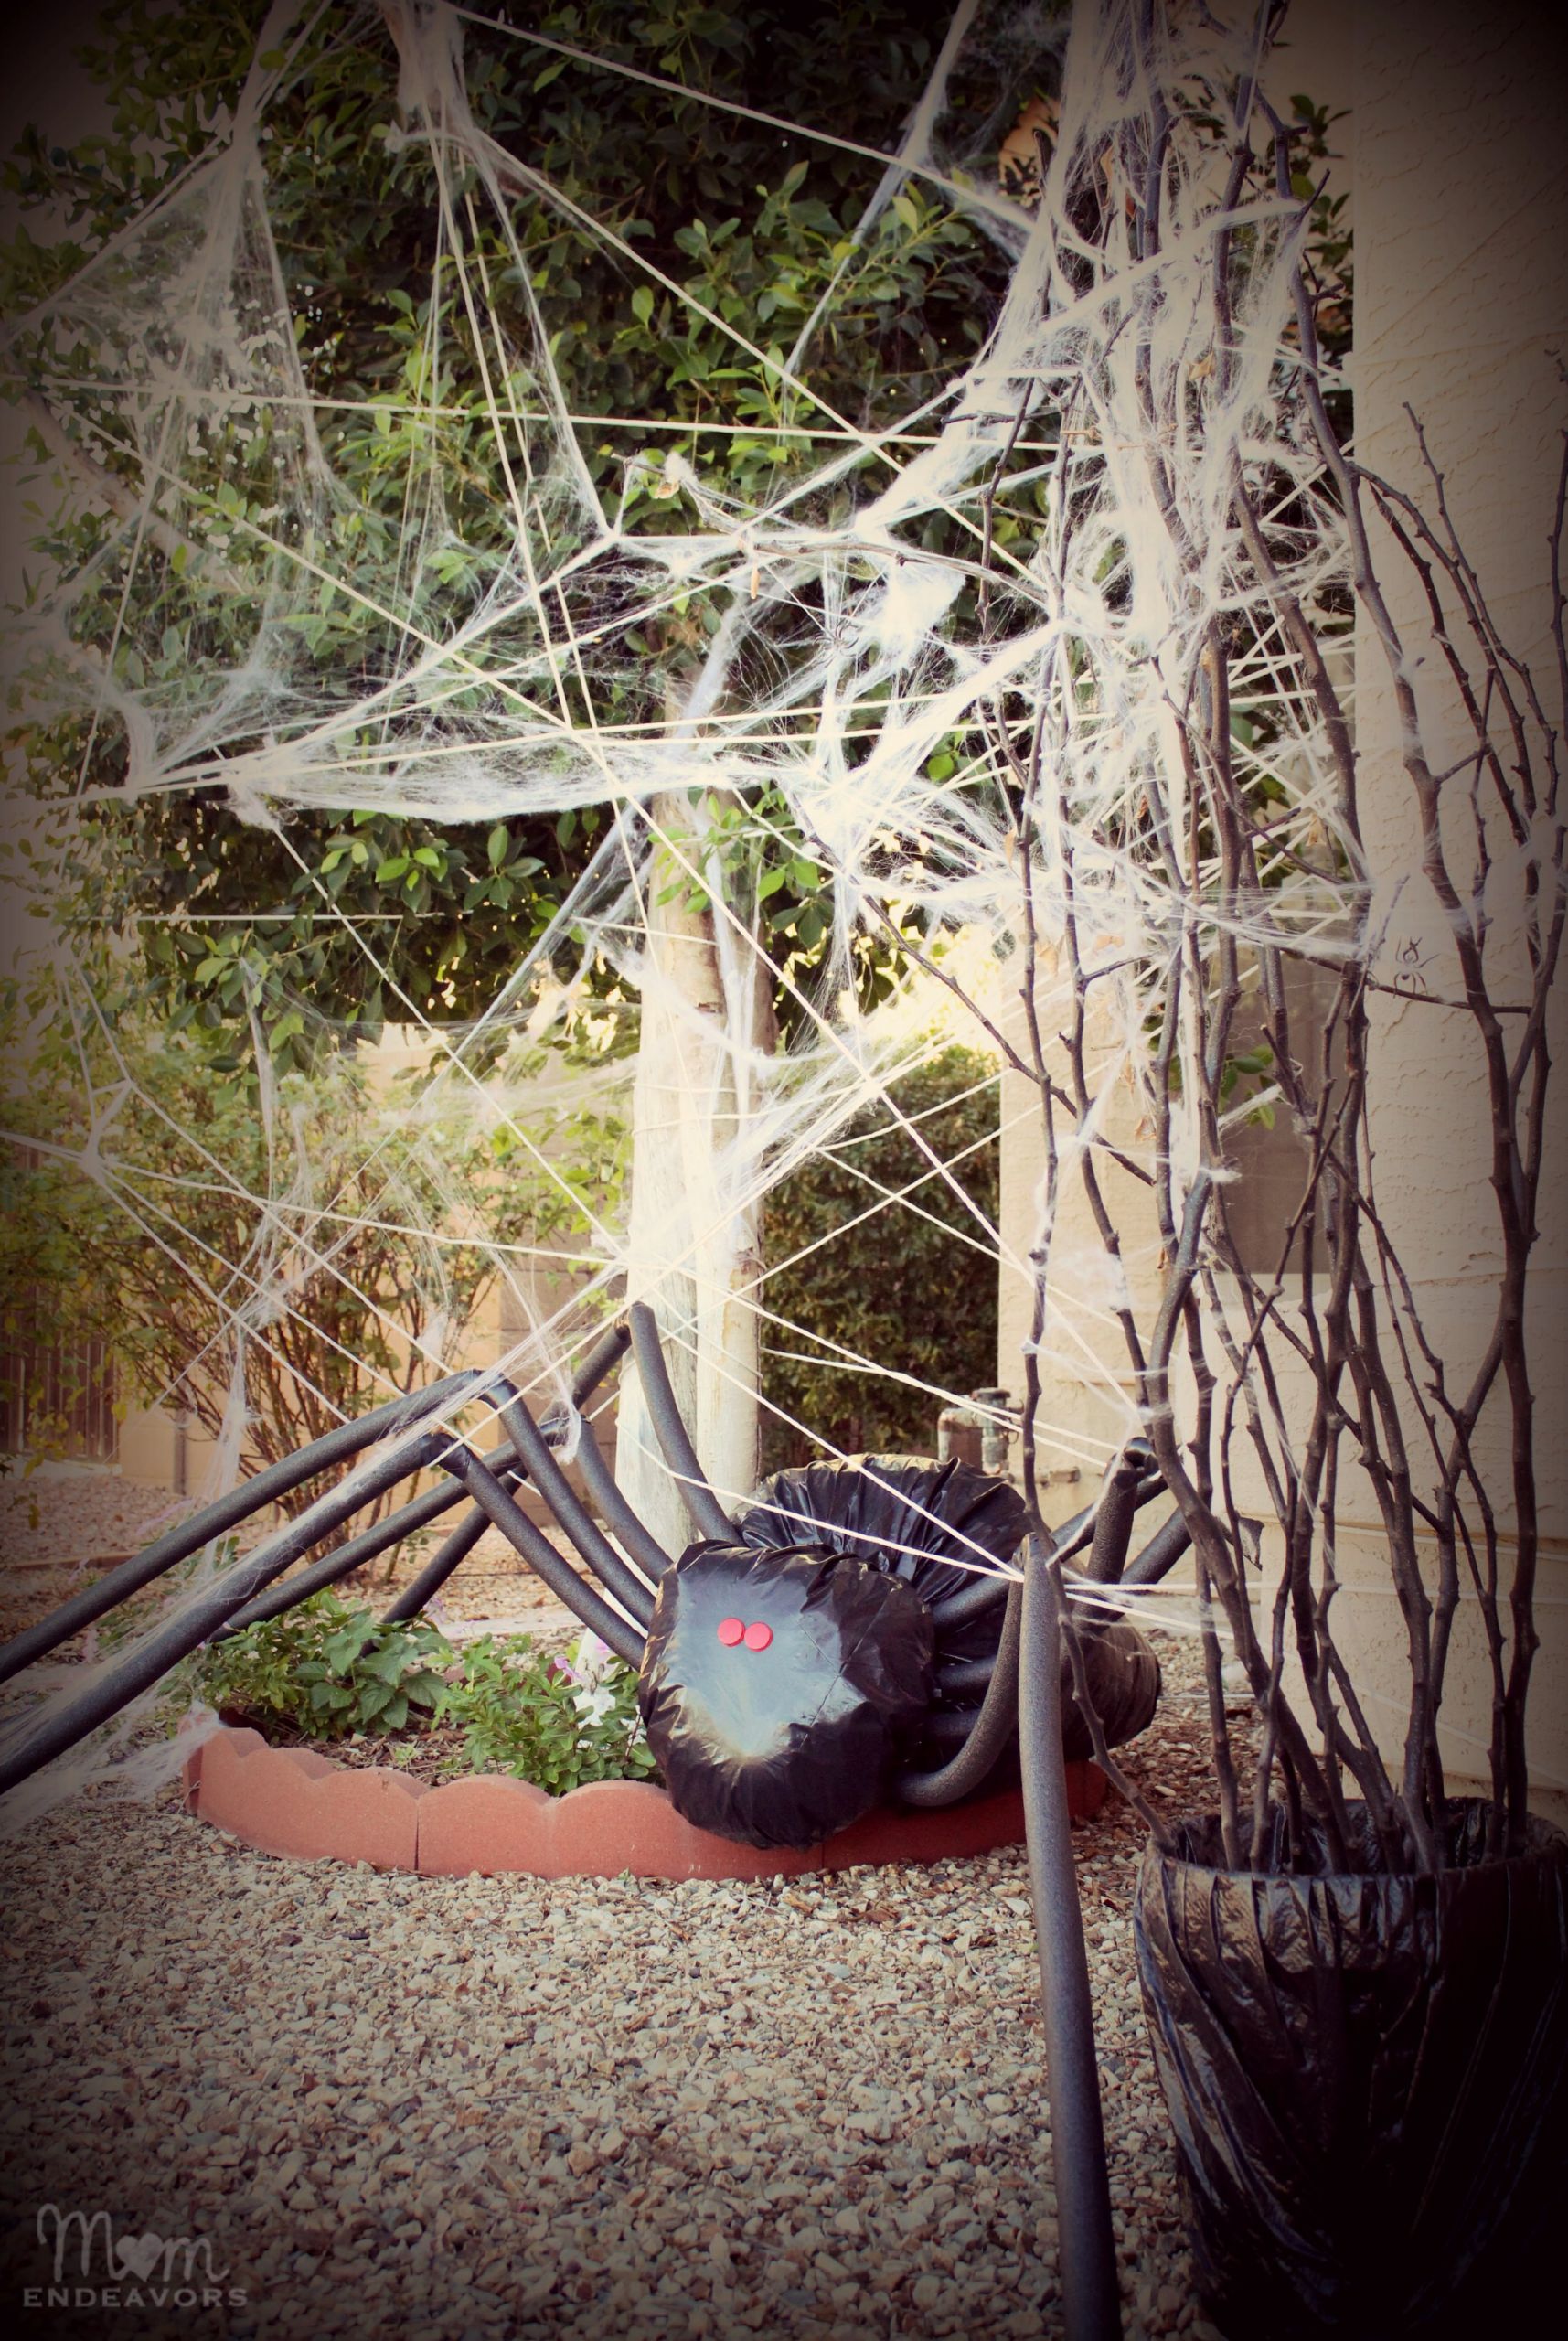 DIY Halloween Yard Decorations
 DIY Halloween Yard Decor Giant Spider in Spiderweb